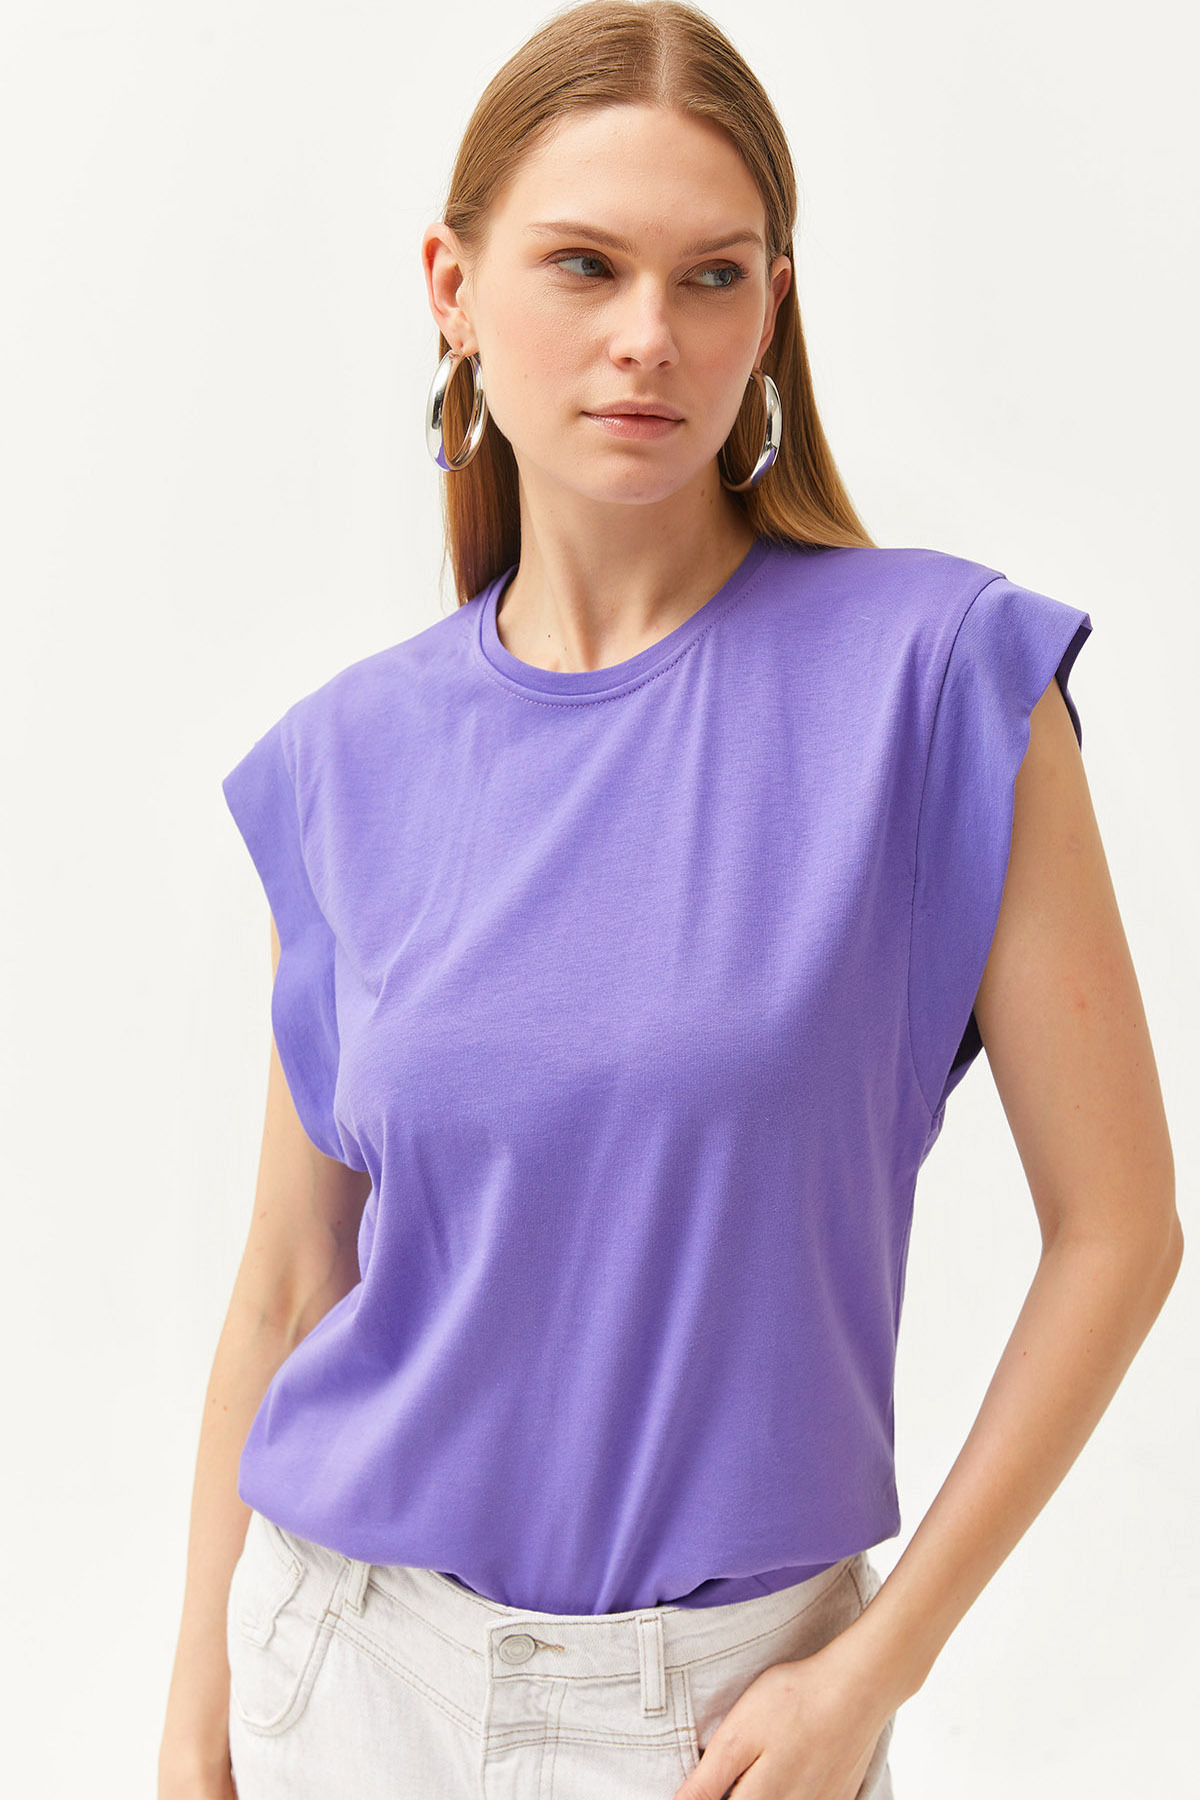 Olalook Women's Purple Underarm Pieced Bat T-shirt